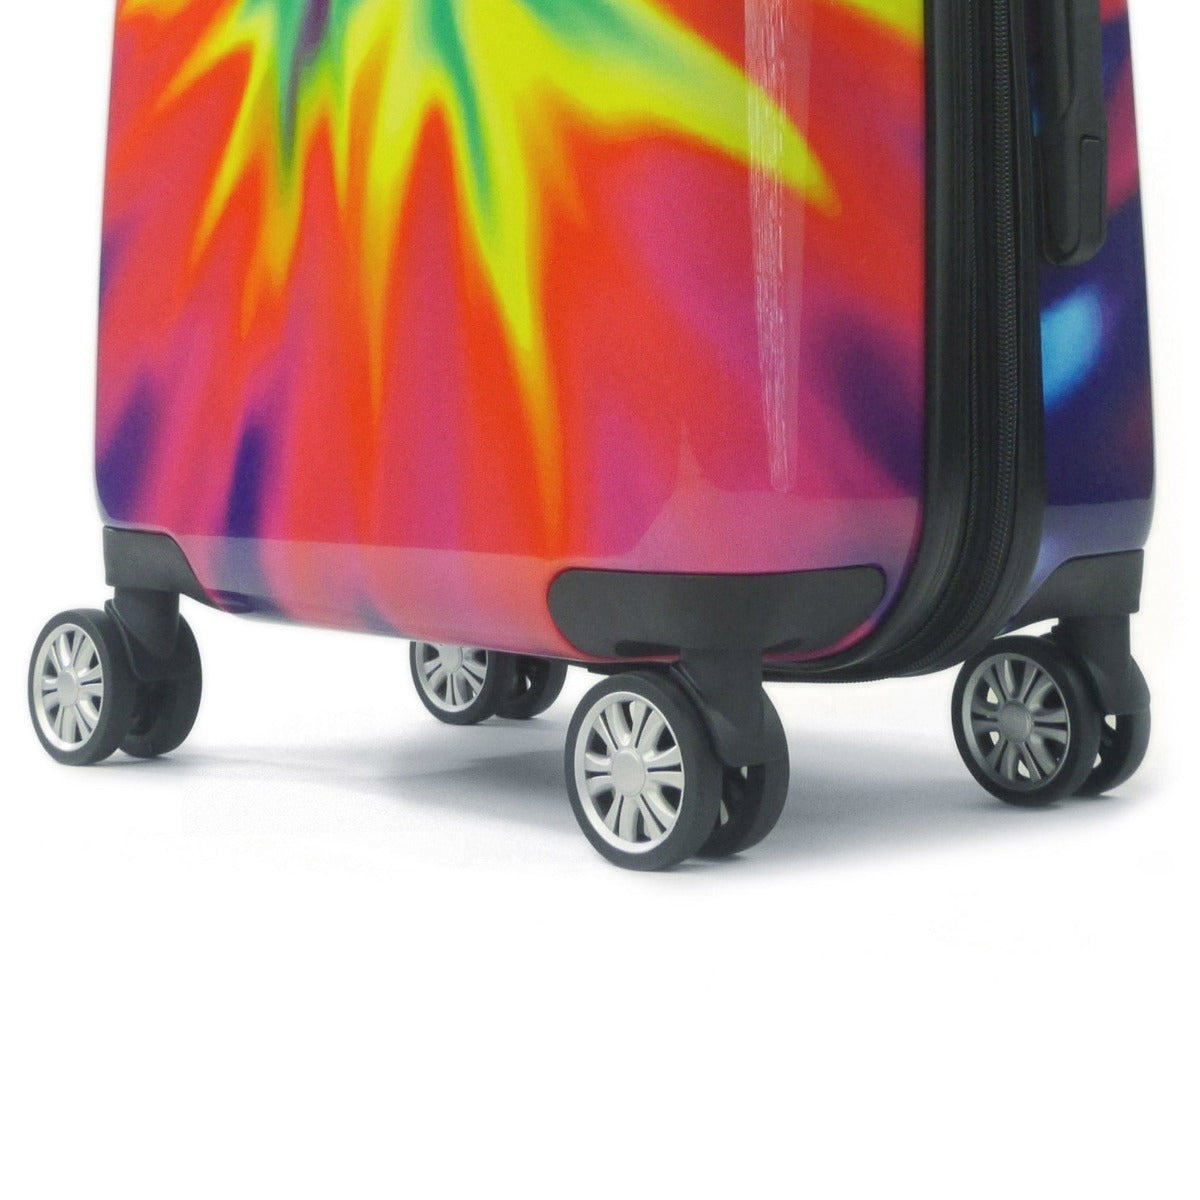 Tie-dye Rainbow Swirl 24" FŪL Spinner Rolling Suitcase Checked Luggage 360 Spinner Wheels